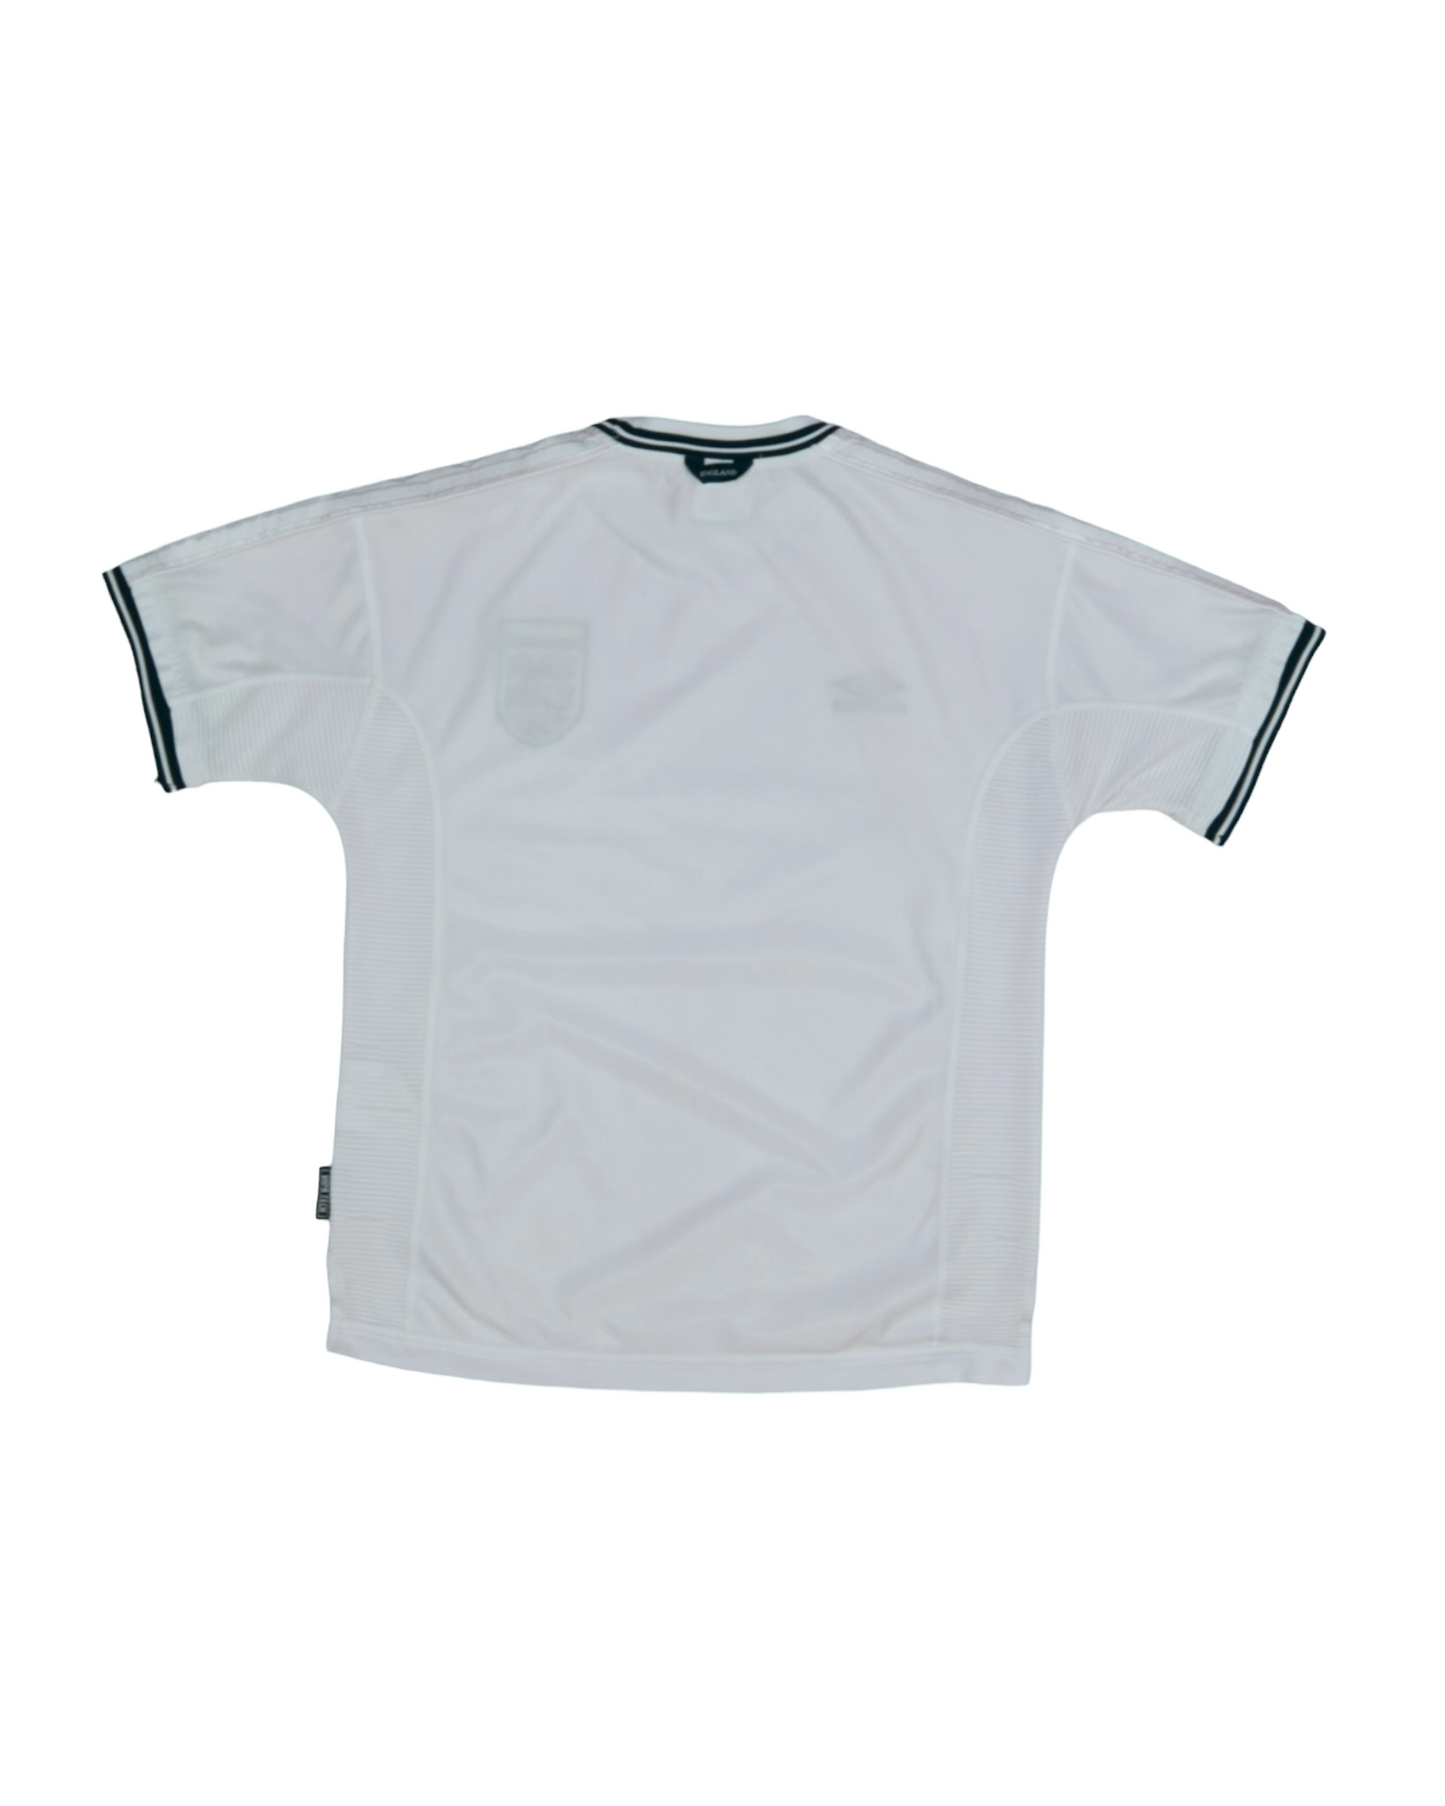 Vintage England Umbro Vapa Tech 1999 2000 2001 Home Football Shirt White Size M Euro 2000